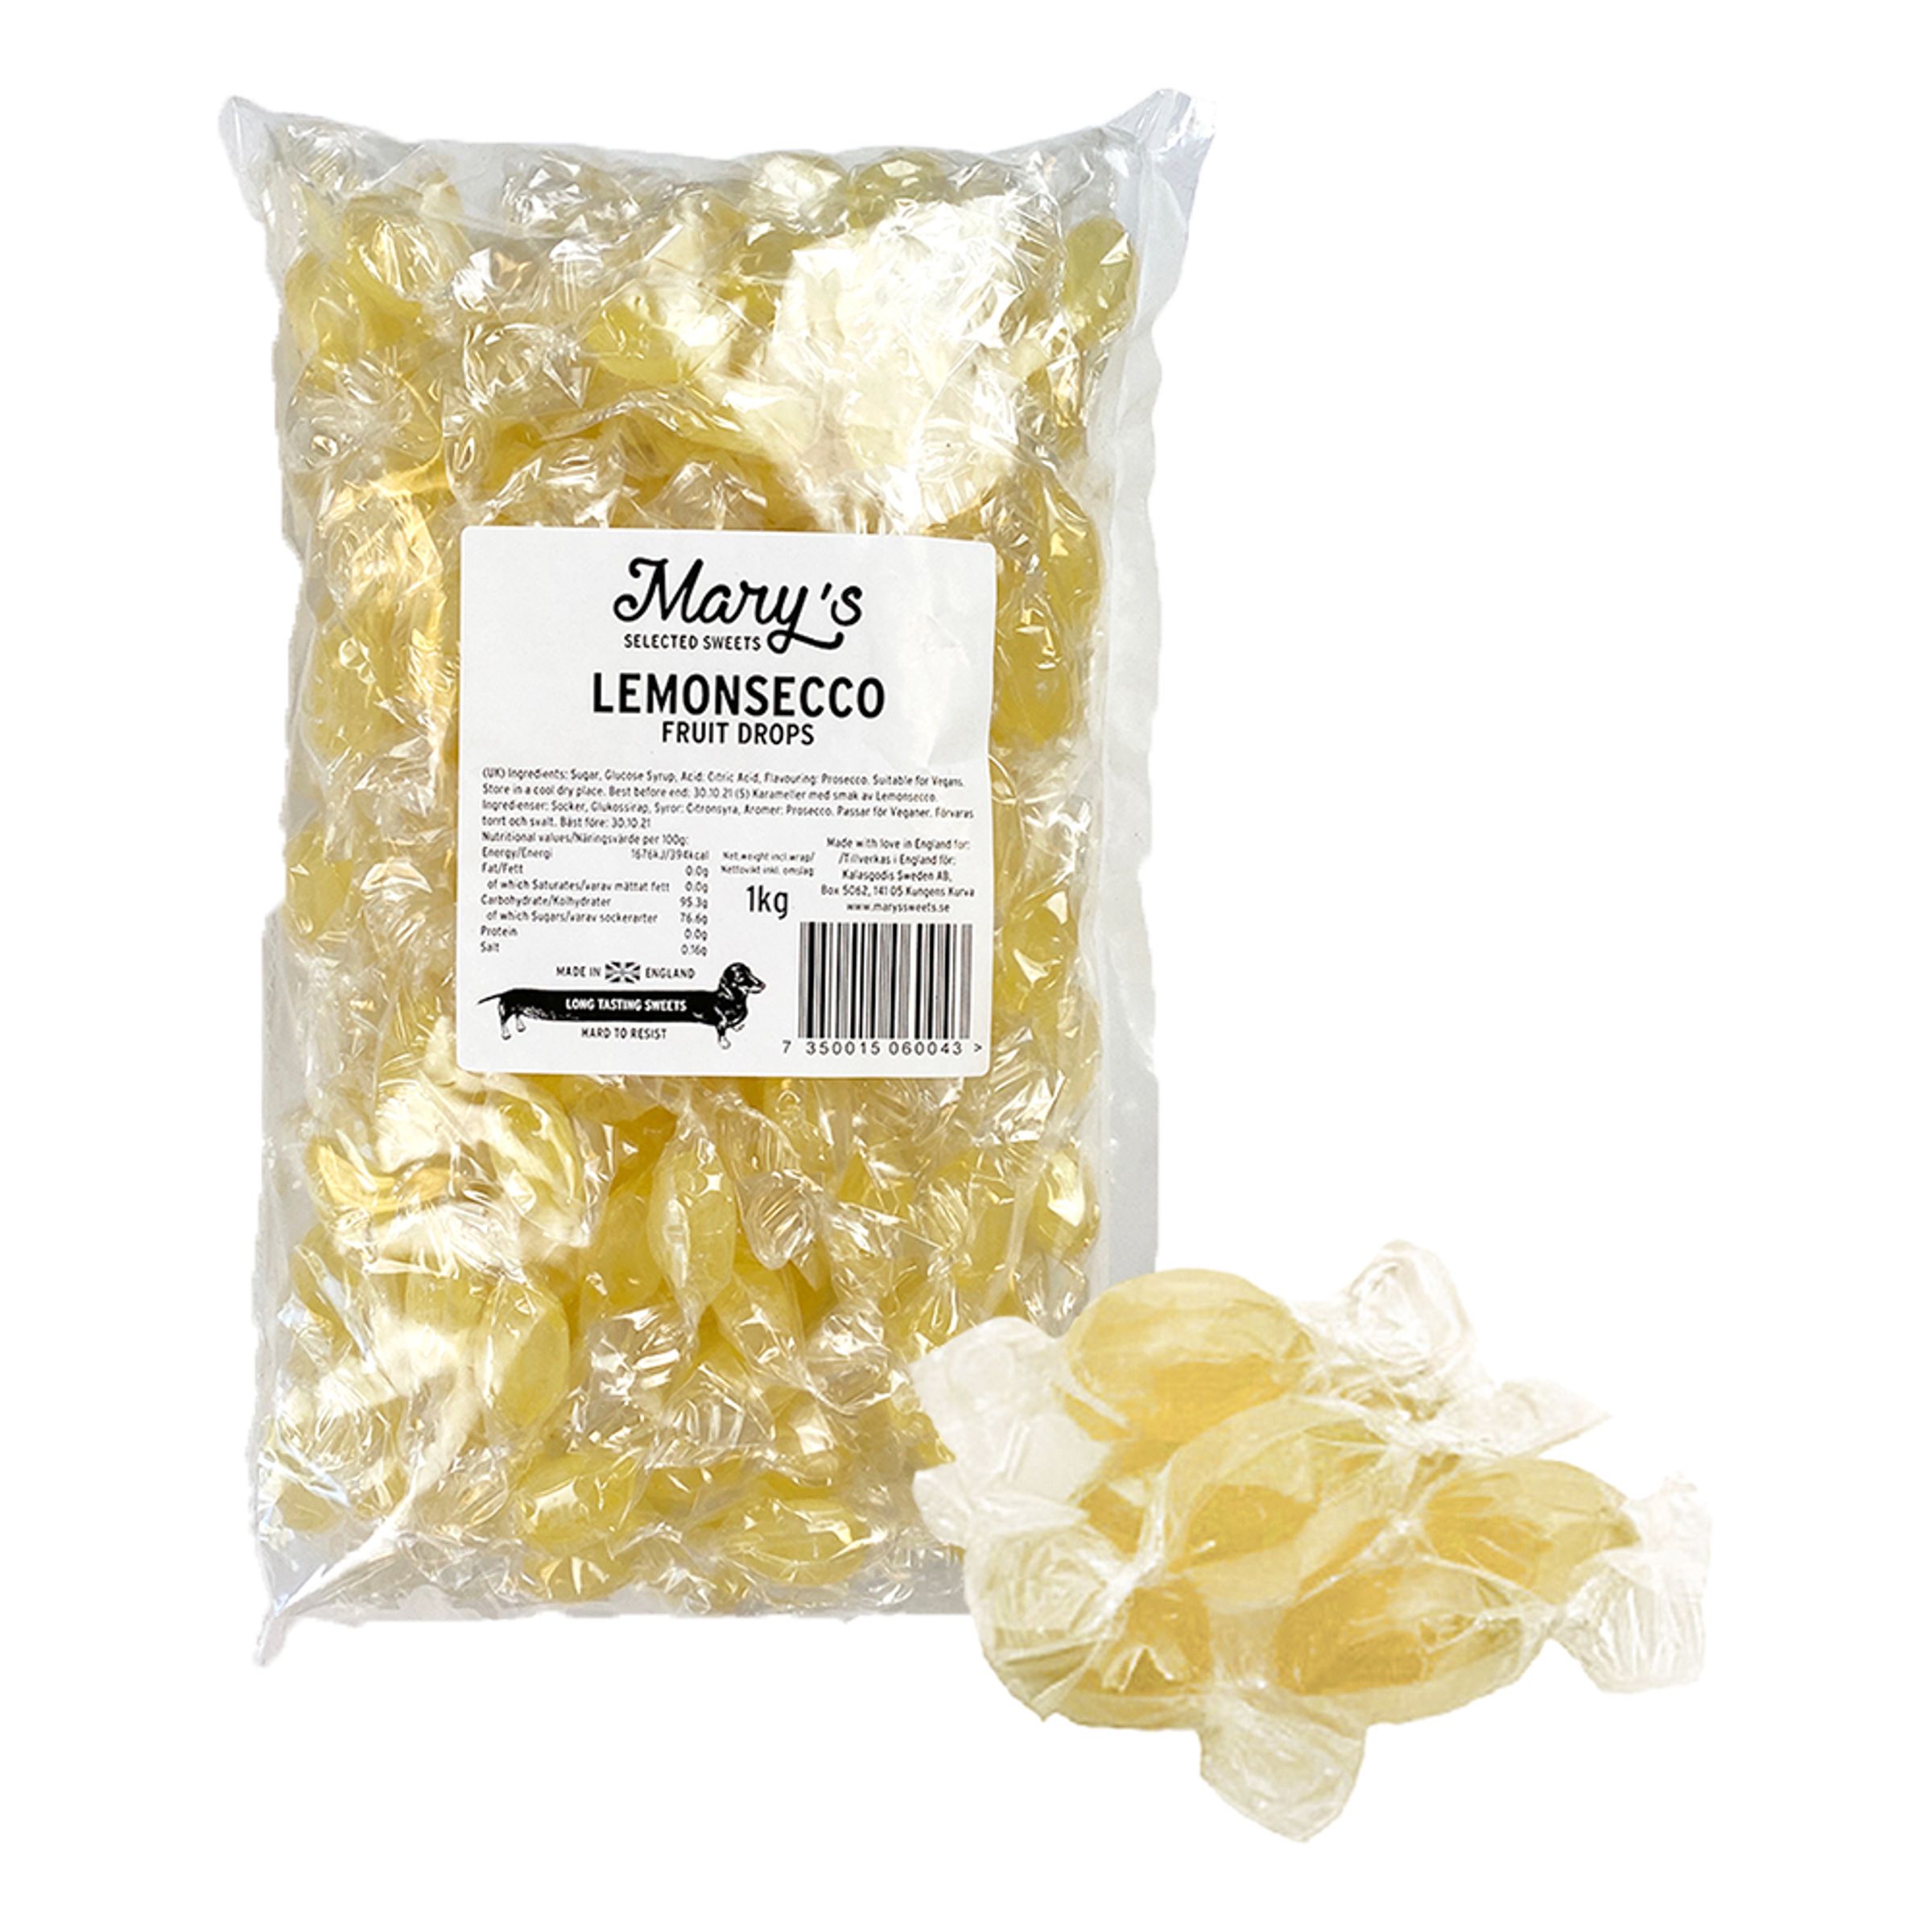 Manys Lemonsecco Karameller Storpack - 1 kg